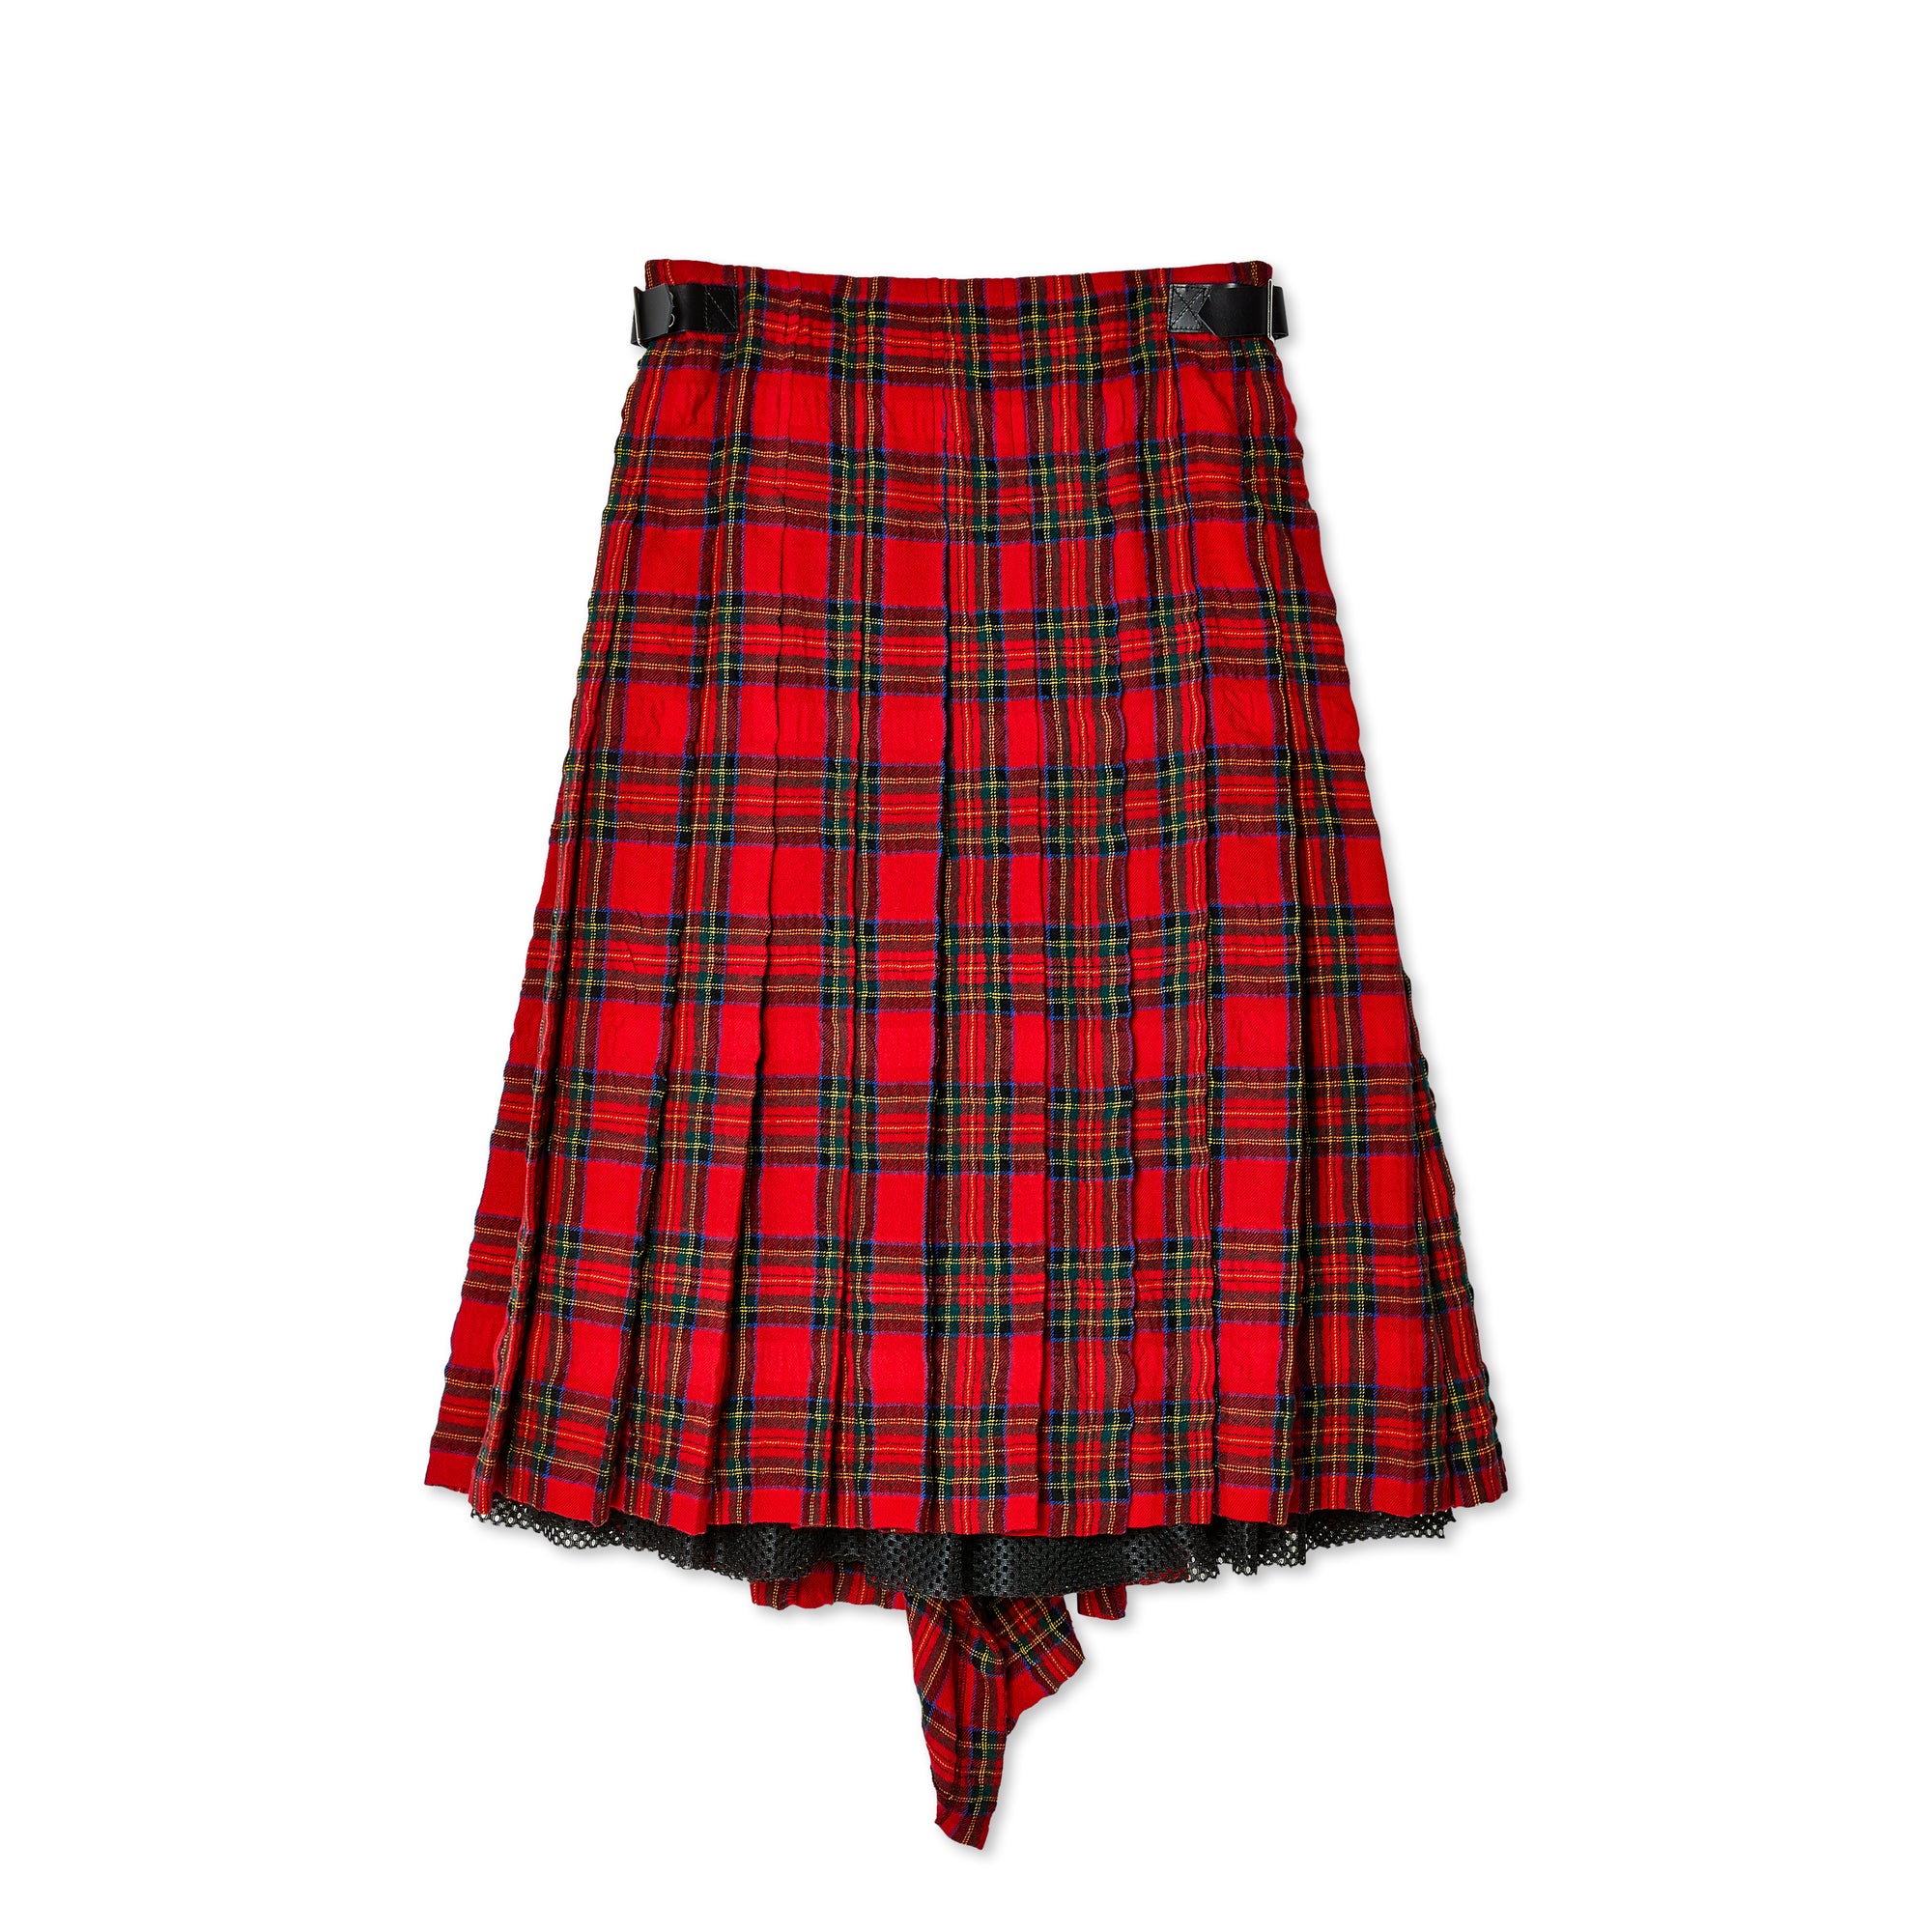 Tao - Women's Skirt - (Red/Tartan) view 1